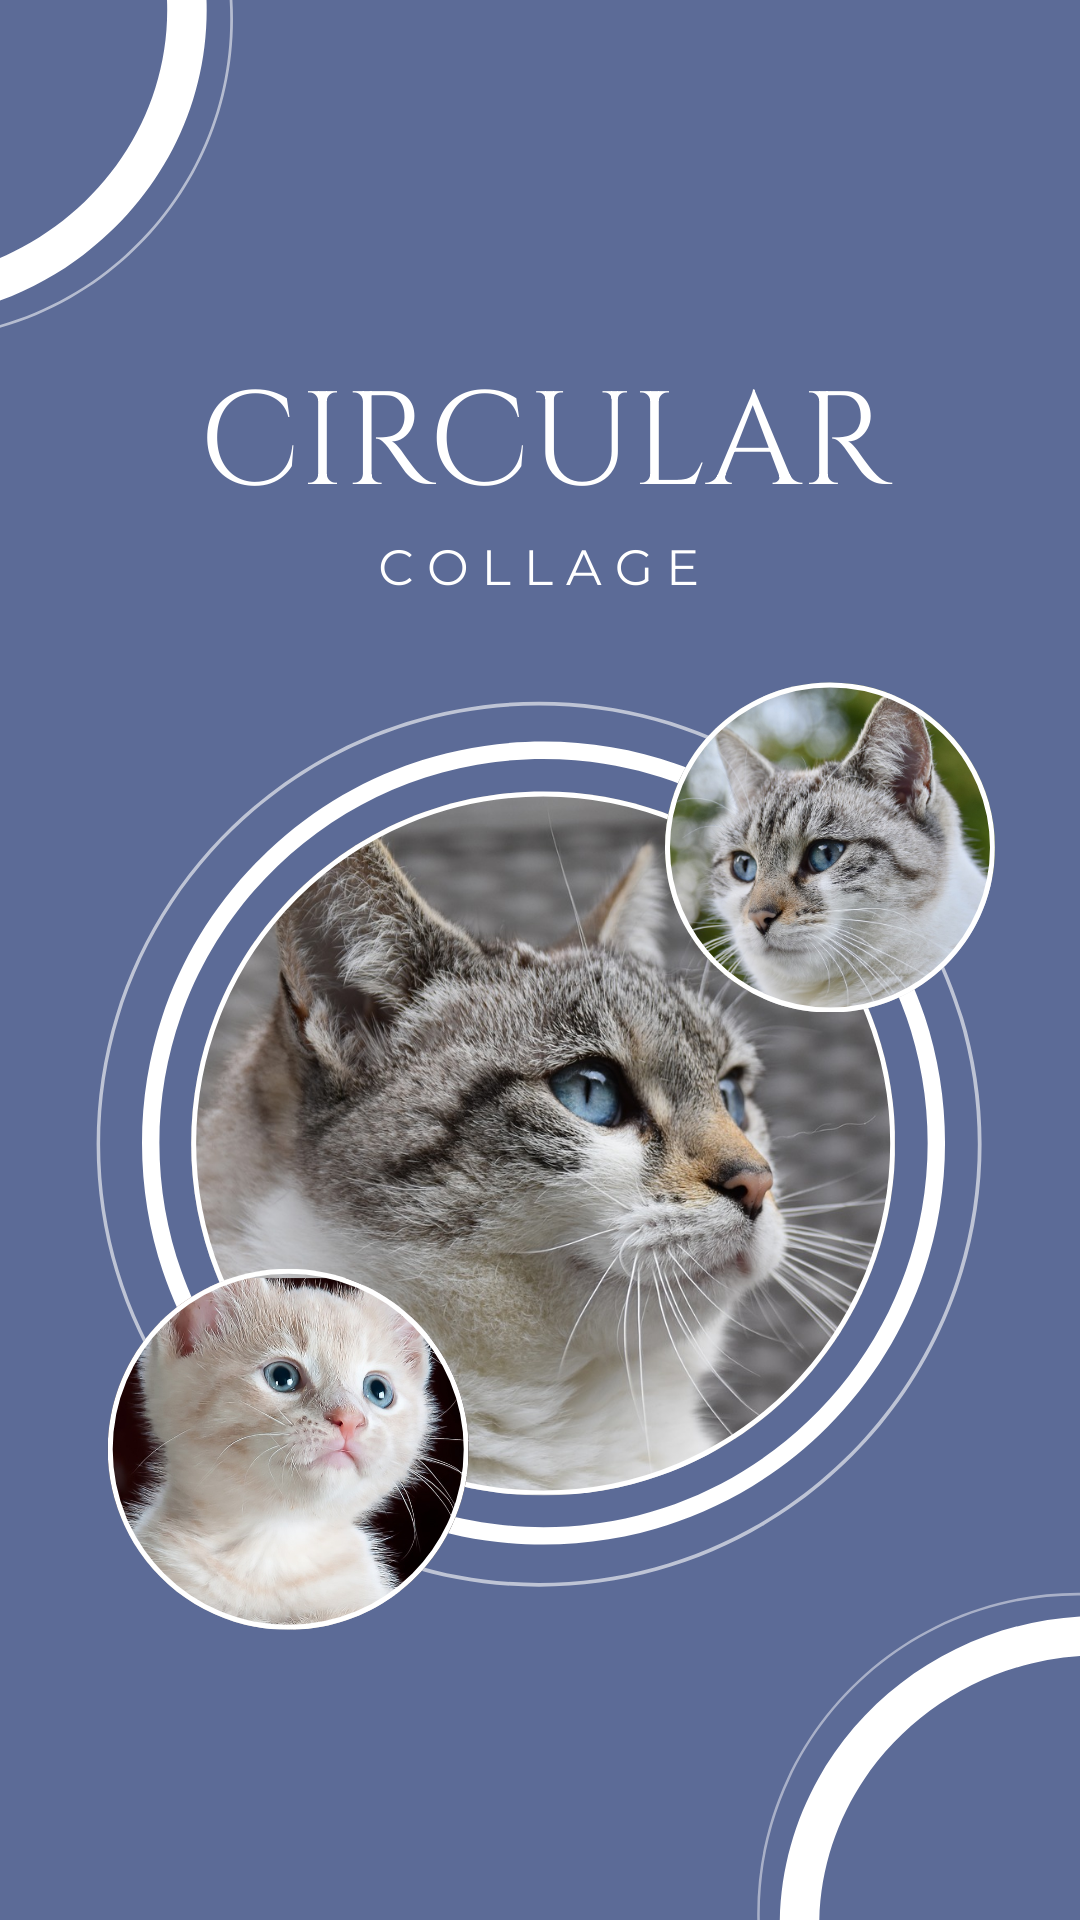 Circular Collage